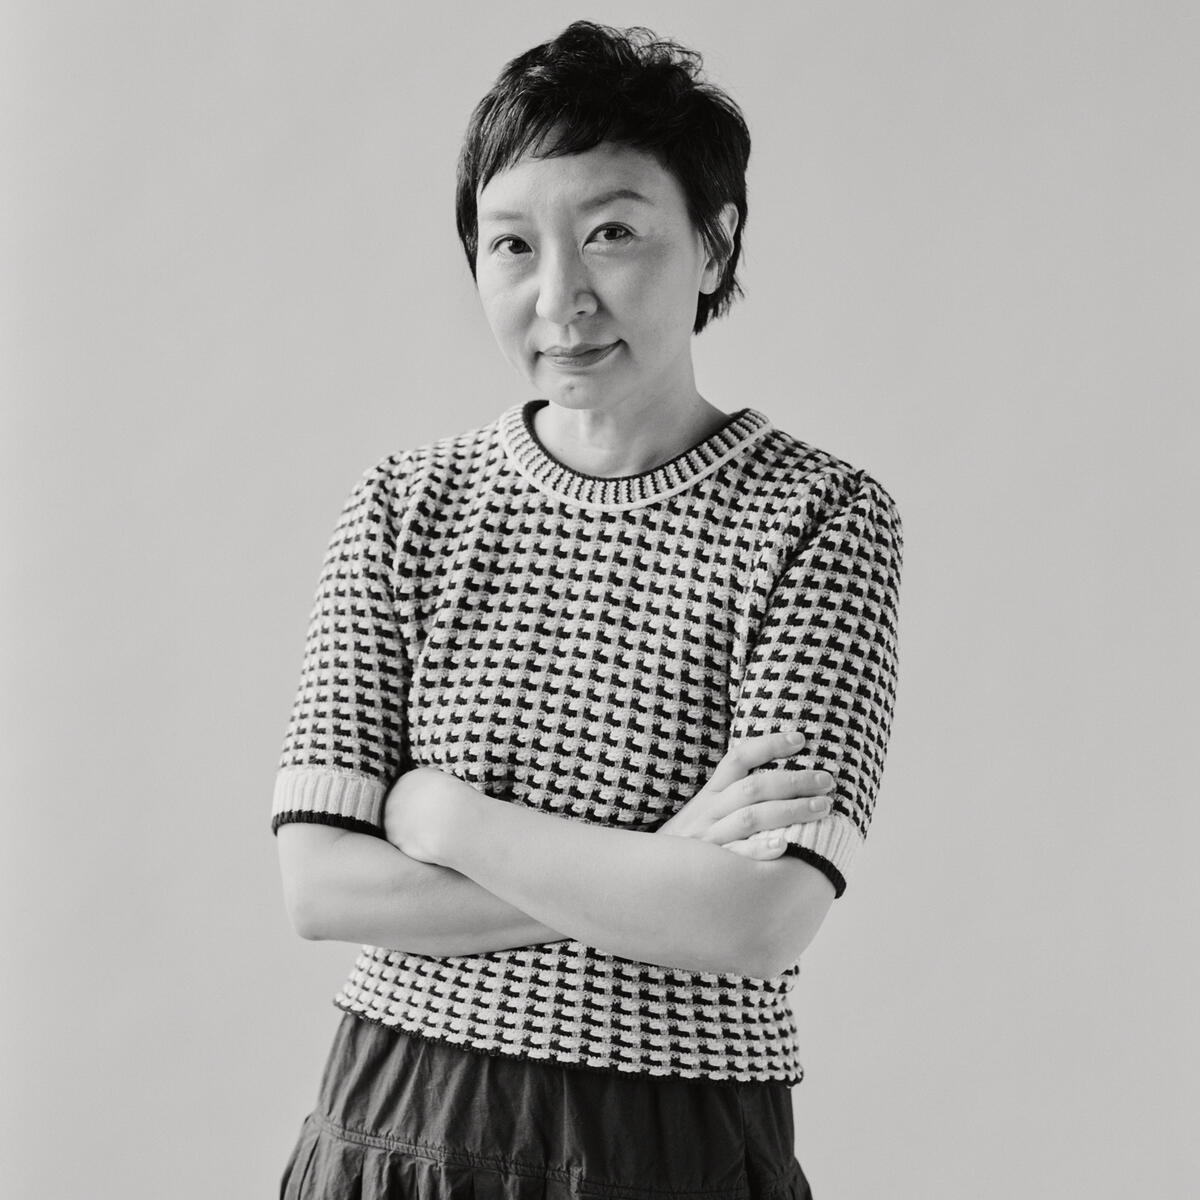 Professor Cathy Park Hong